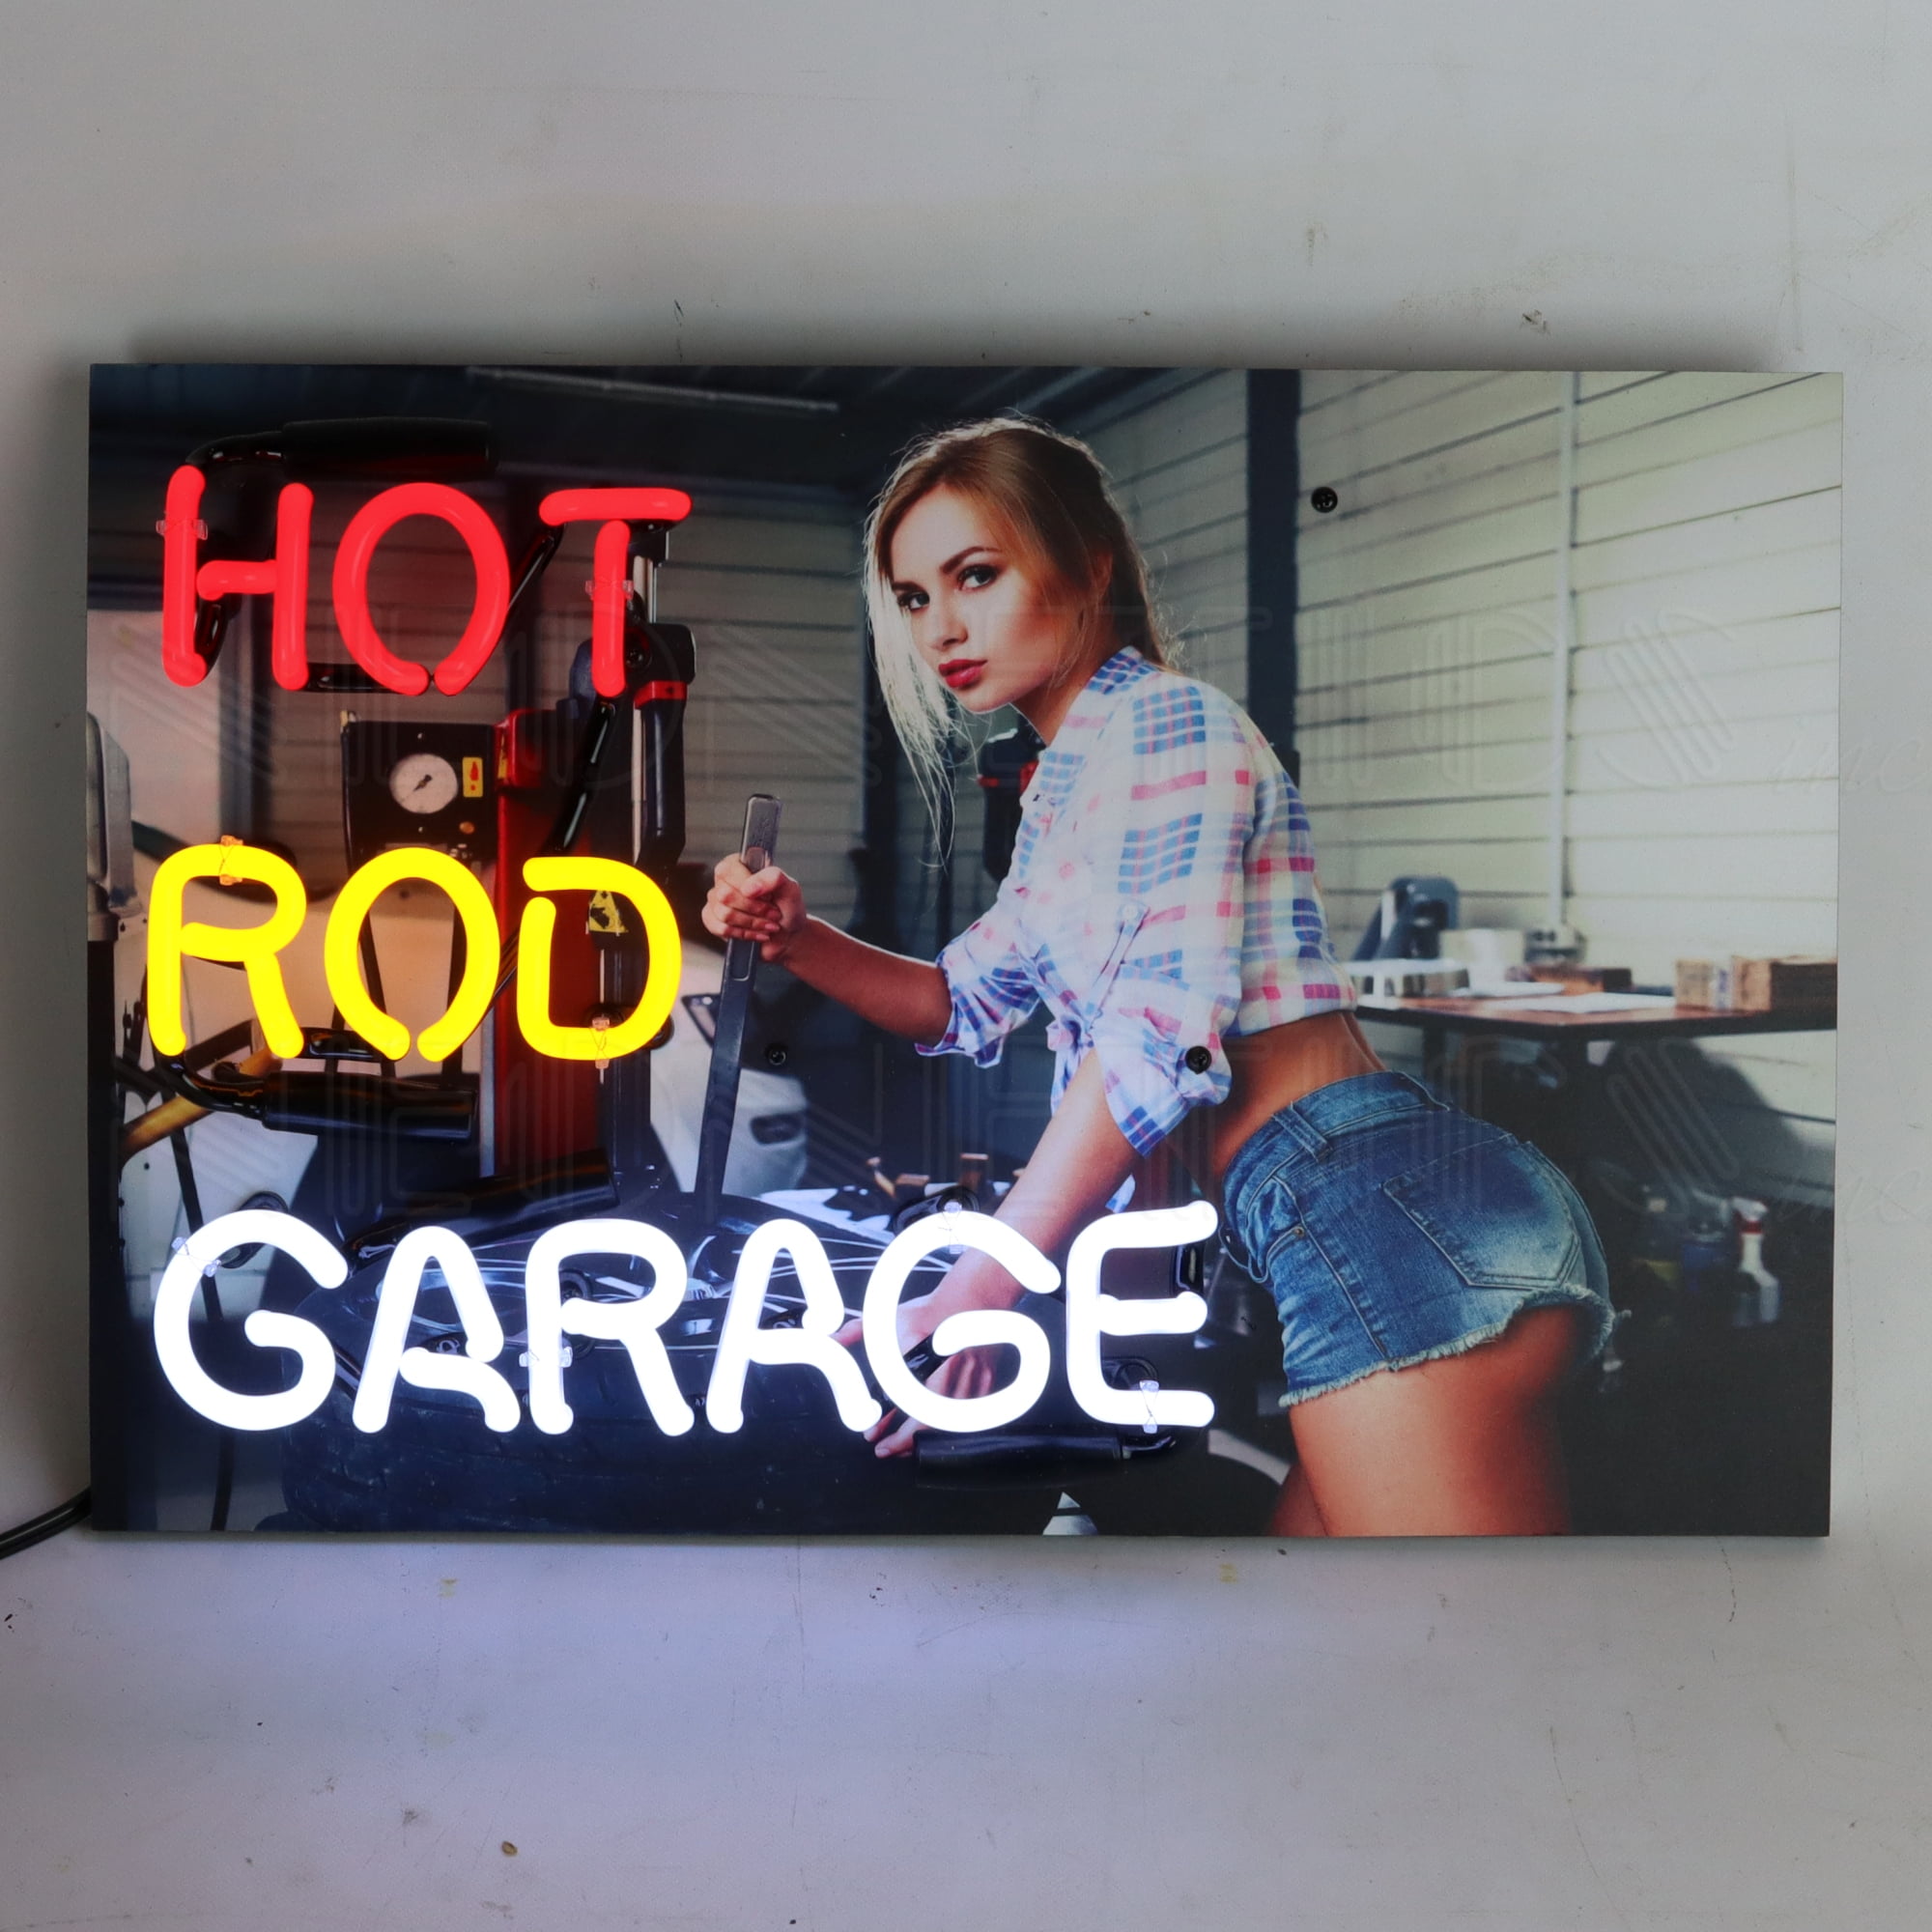 New Dad's Hot Rod Garage Bar Decor Artwork Neon Light Sign 20"x16"